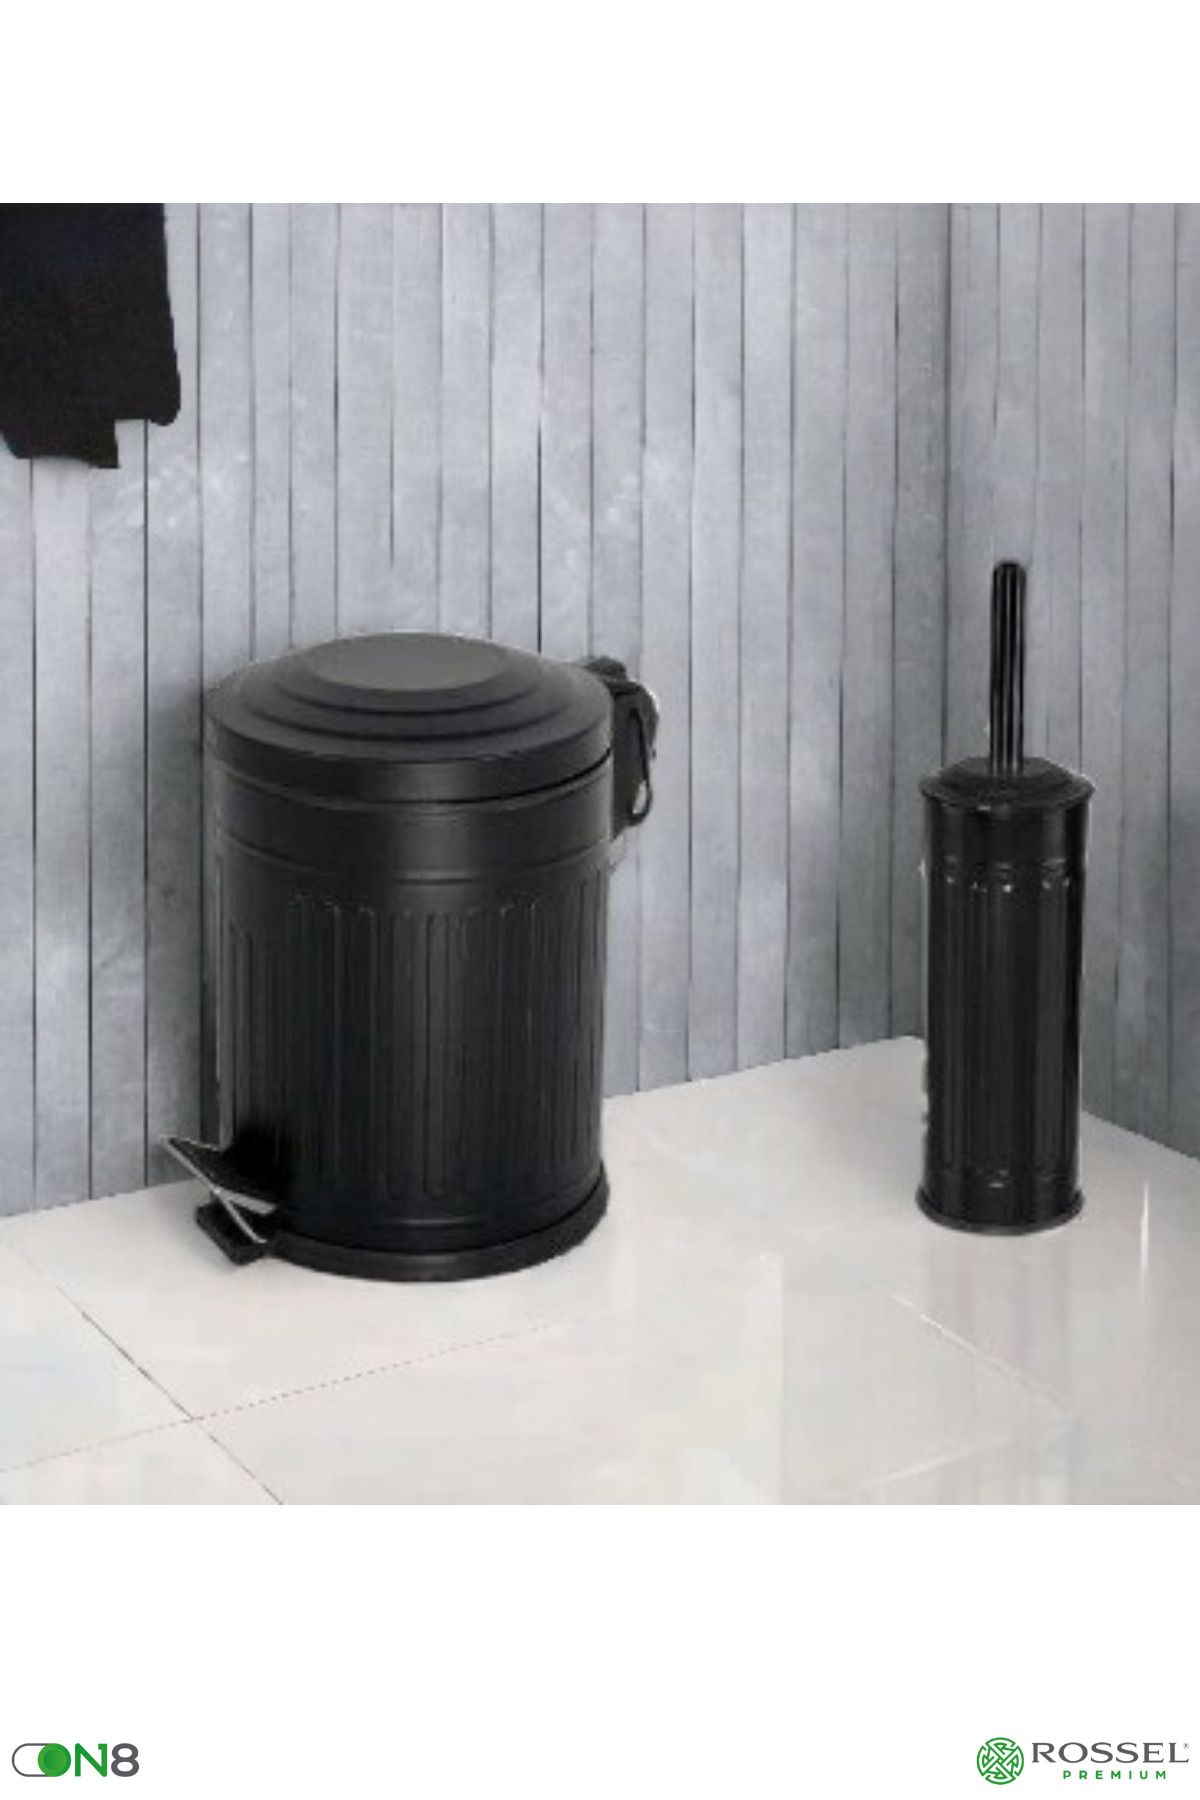 Rossel Premium 2'Li Banyo Seti Vintage Siyah Renk 5+2 lt-14404GS